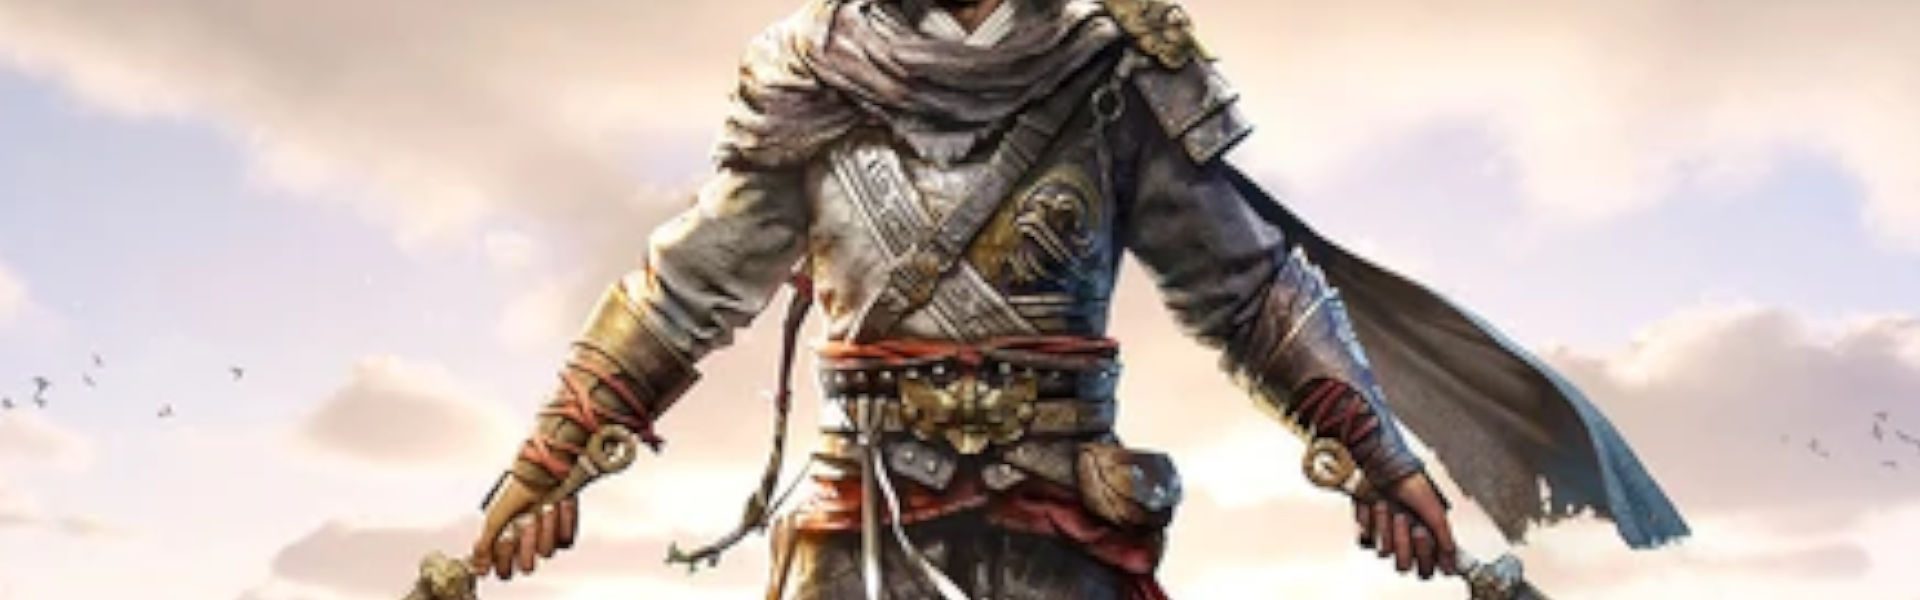 Beta Assassin's Creed Codename Jade ożywia starożytne Chiny